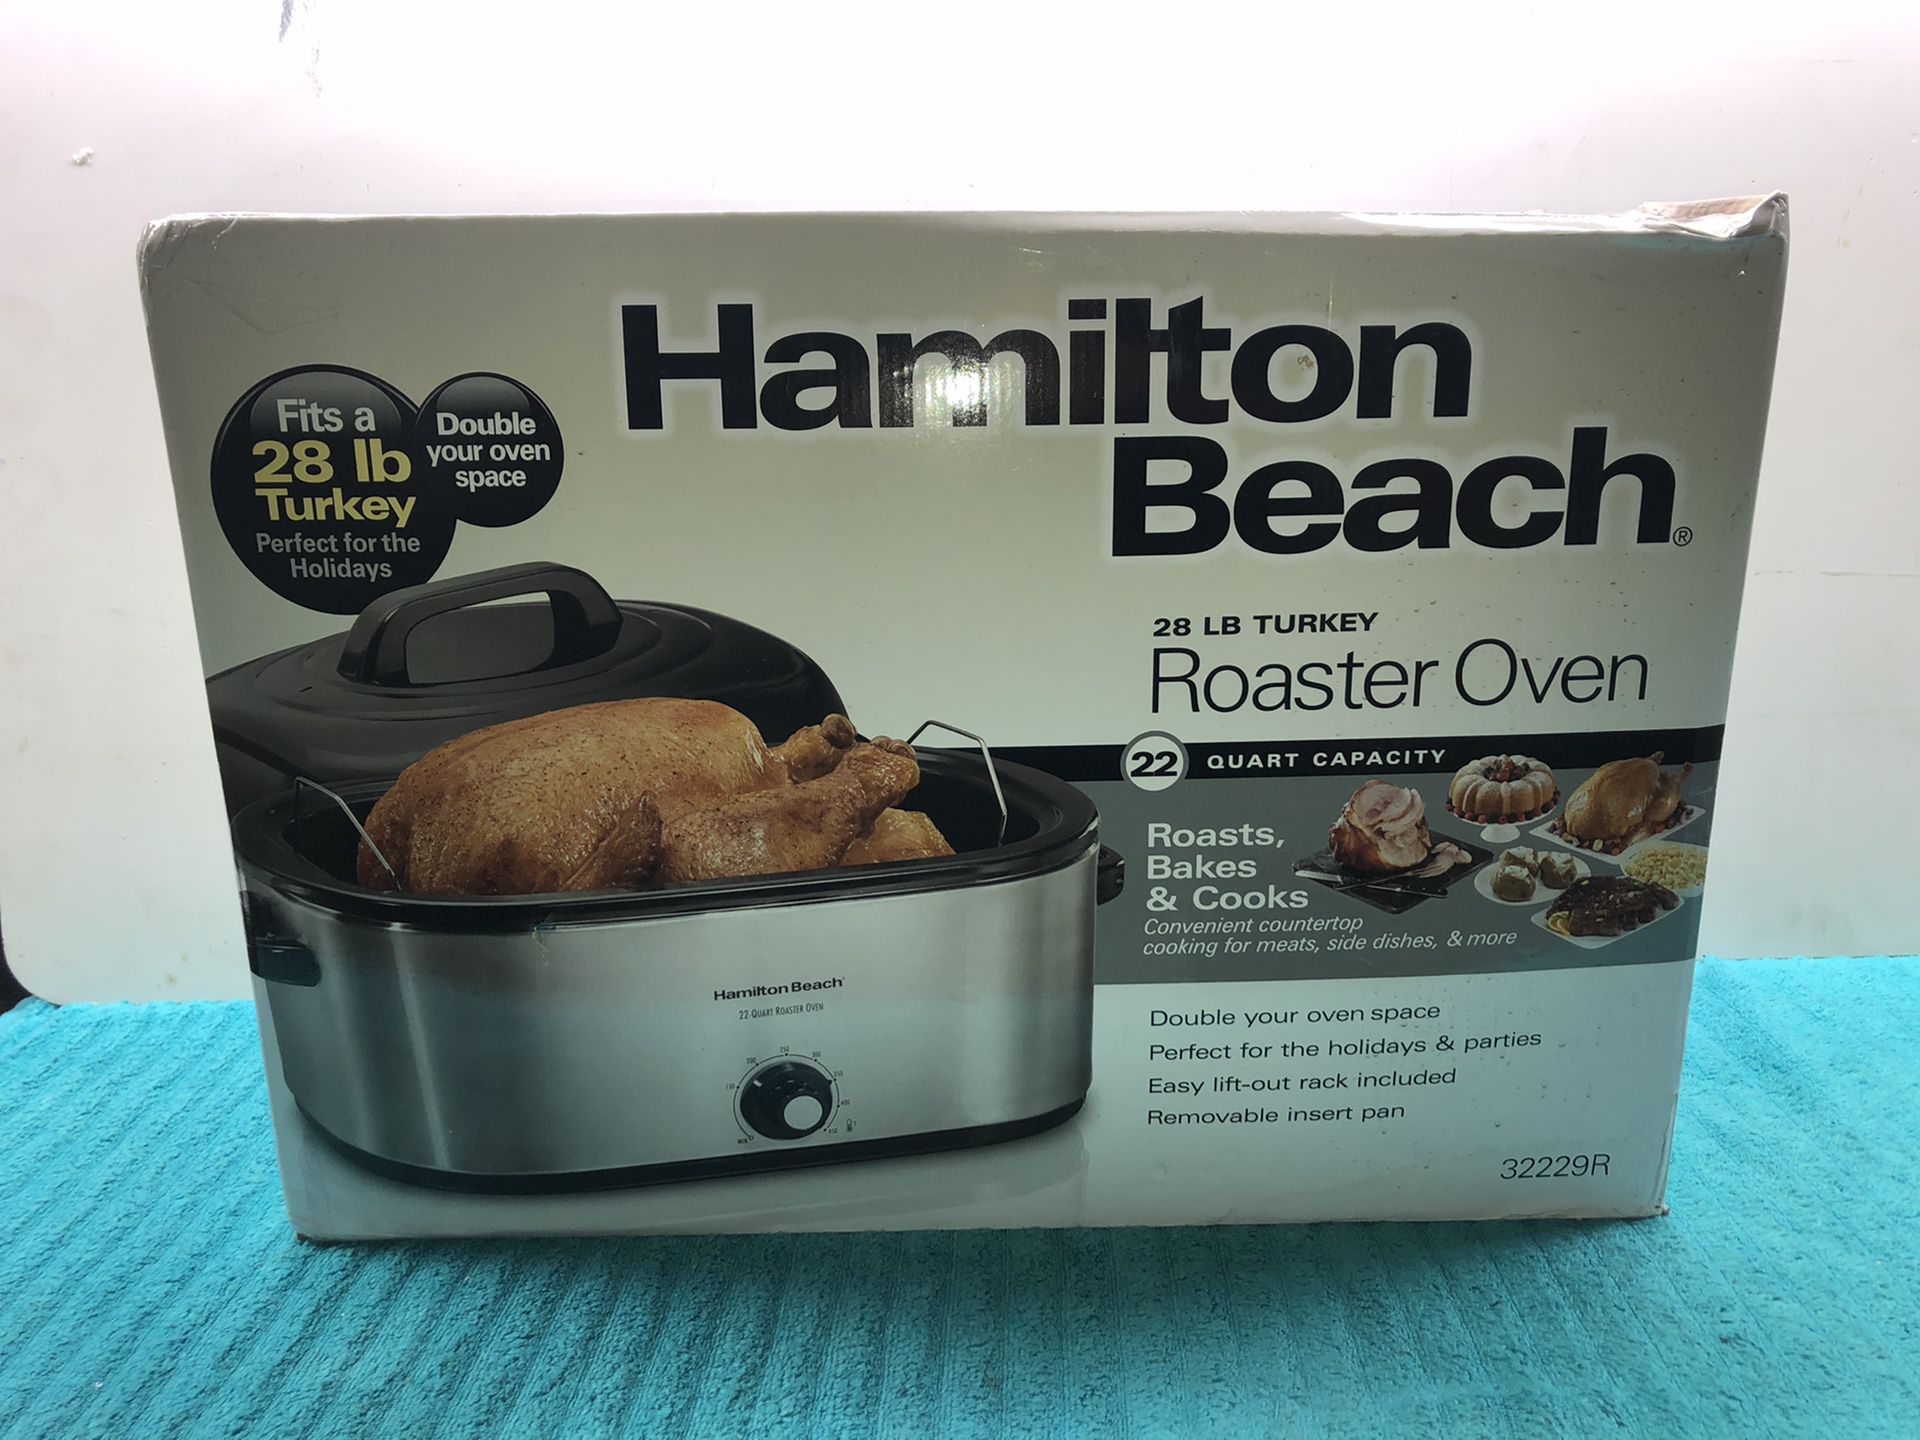 Brand new Hamilton Beach 22 Quart Roaster Oven Cooker, Fits 28 lb Turkey crock pot pressure cooker Etc. Price is firm